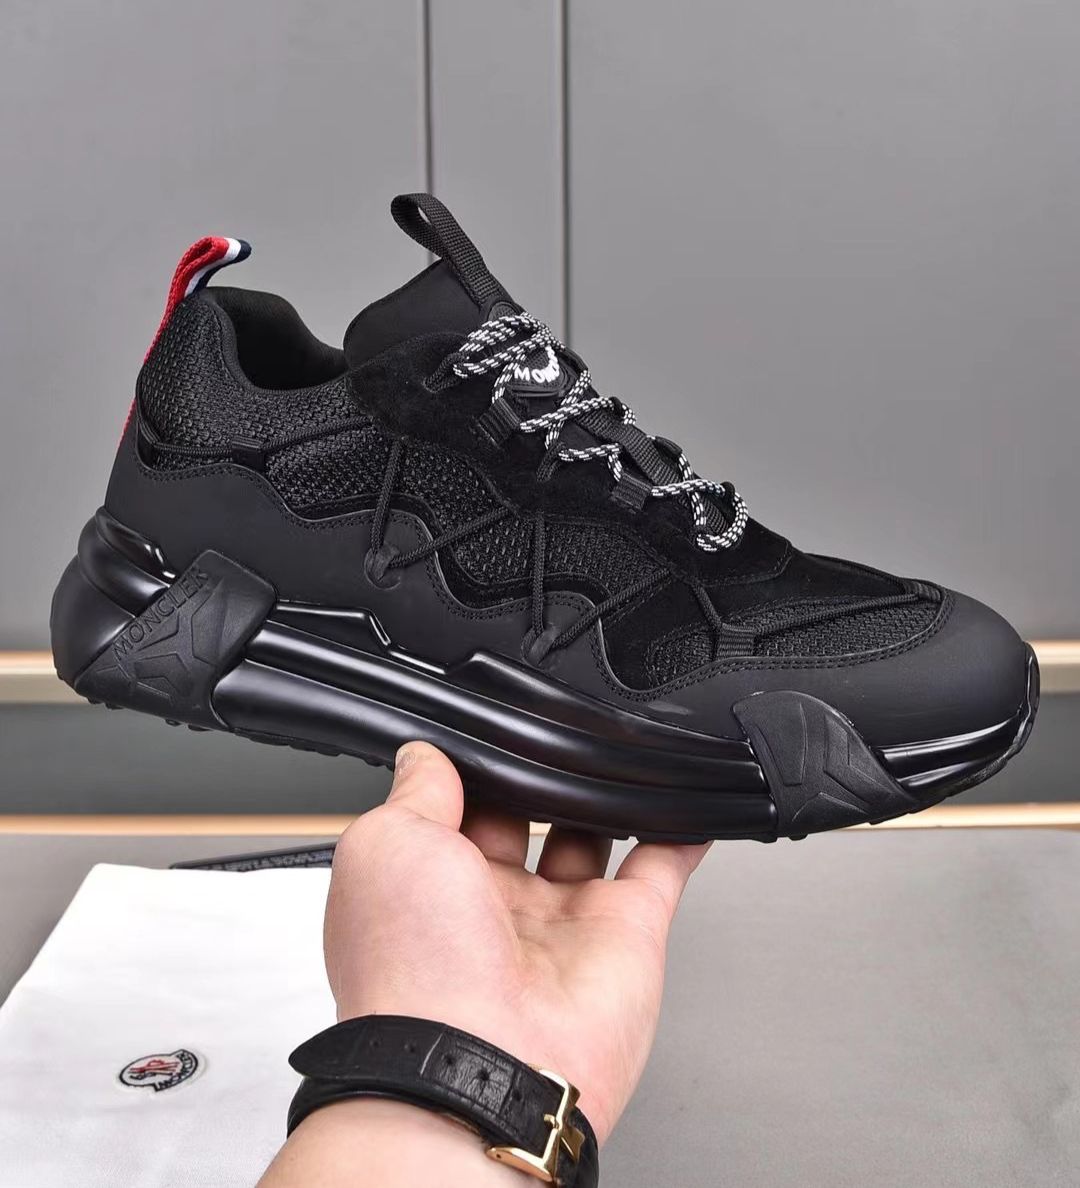 Avia Black Running Shoes Enduropro Athletic Sneakers Comfort Mens Size -  beyond exchange